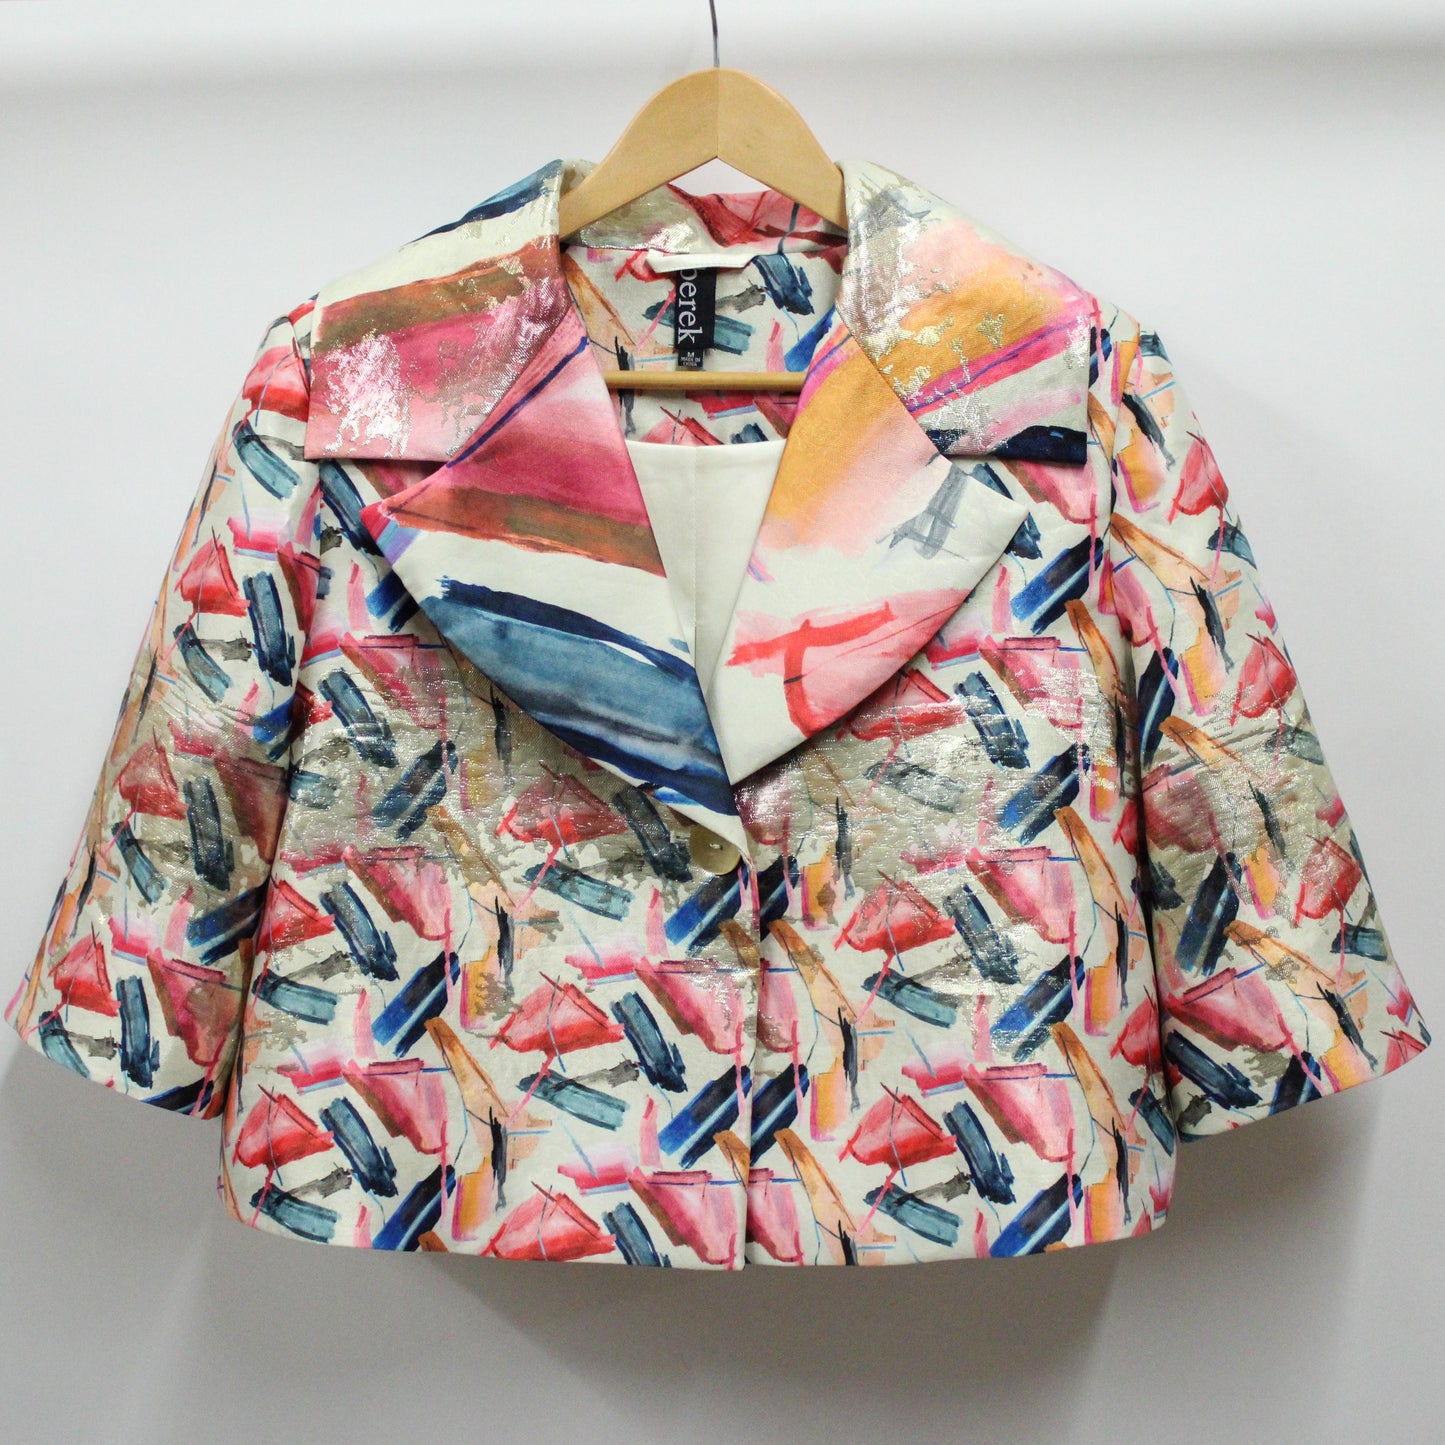 A Colorful Jacquard Bolero Jacket